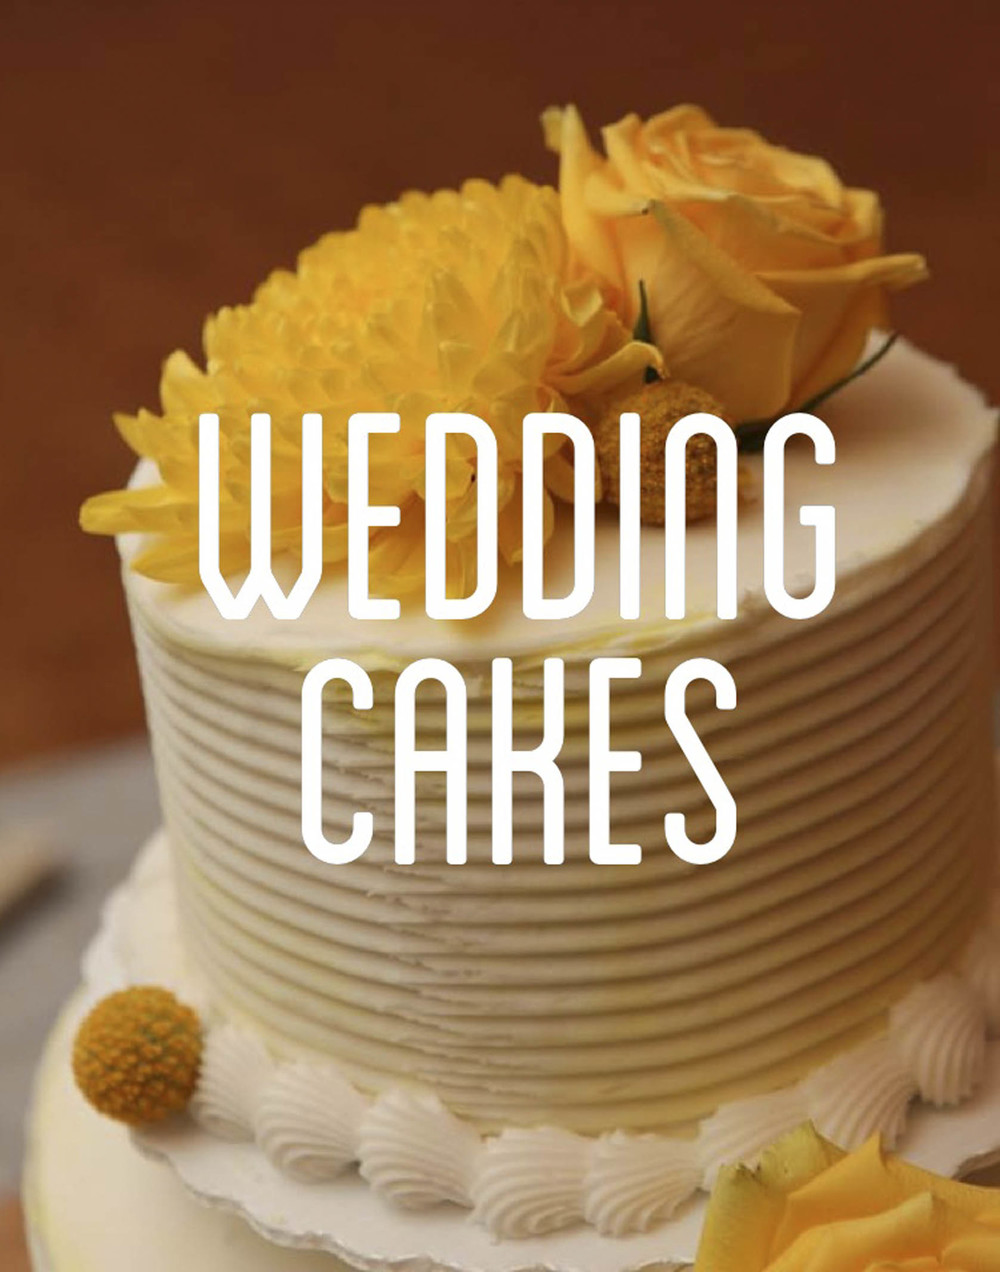 Wixey bakery wedding cake prices